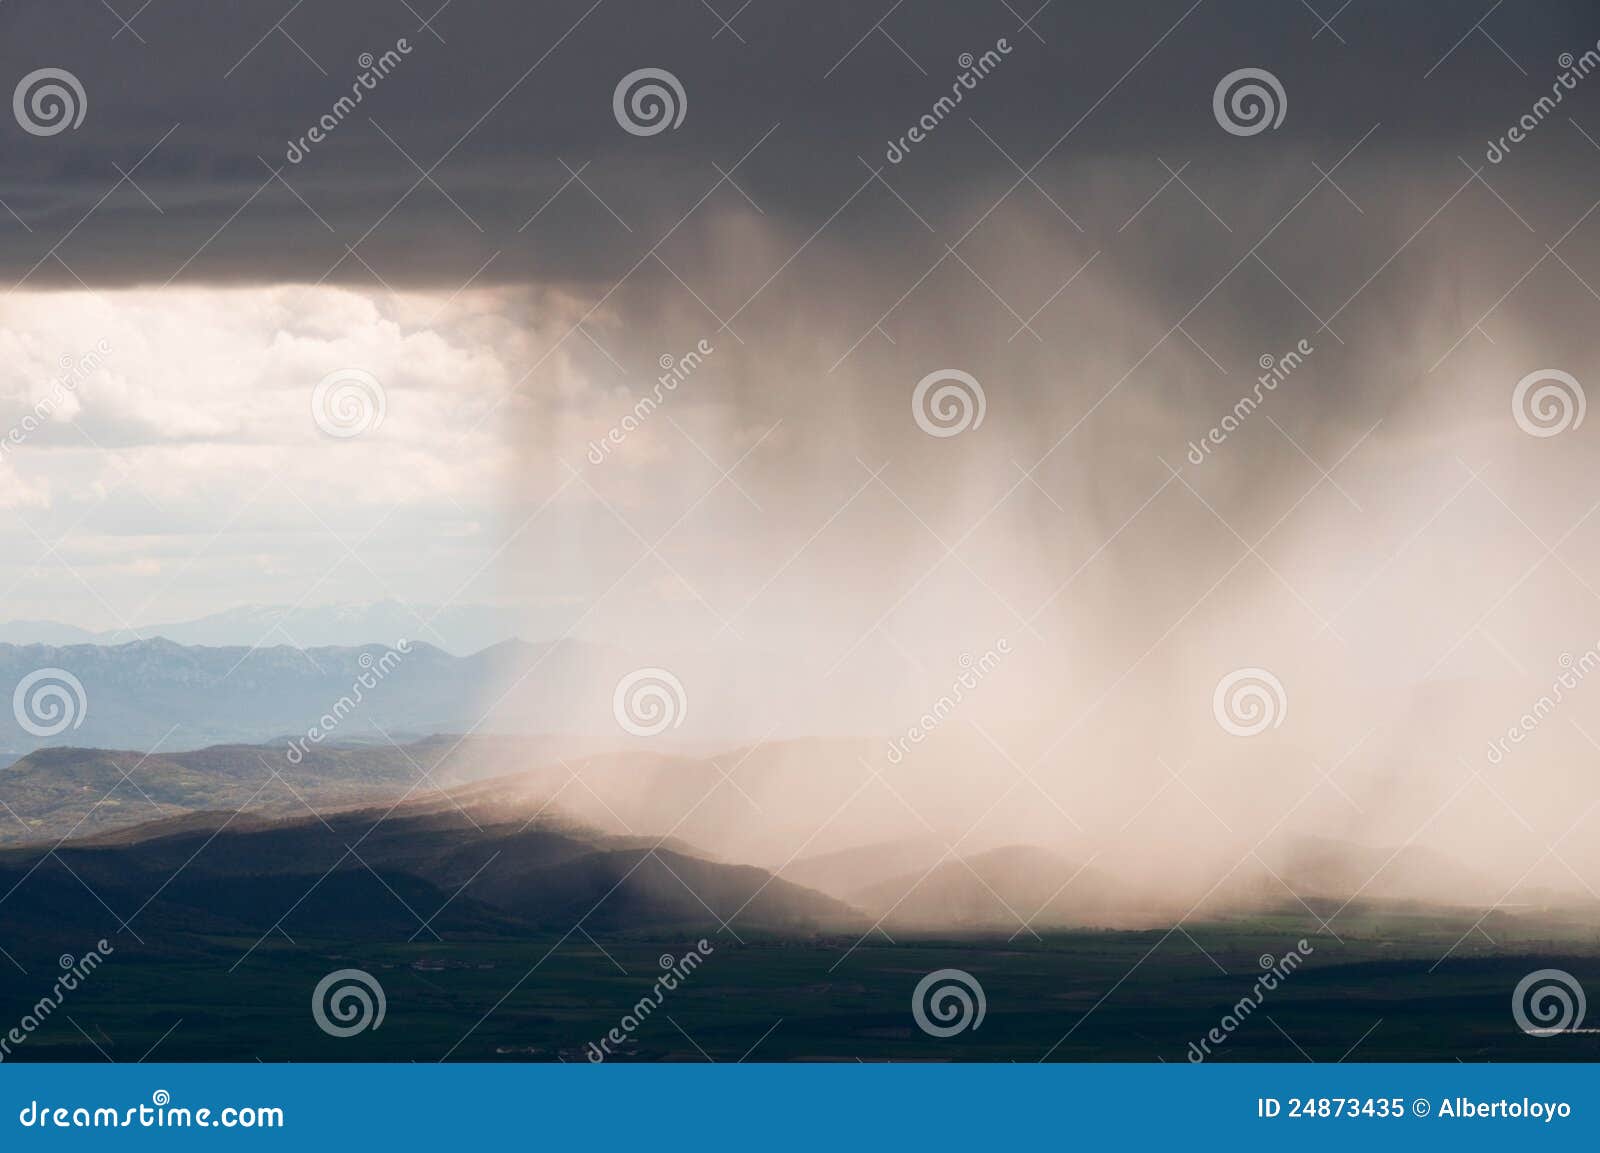 rain storm, basque country (spain)